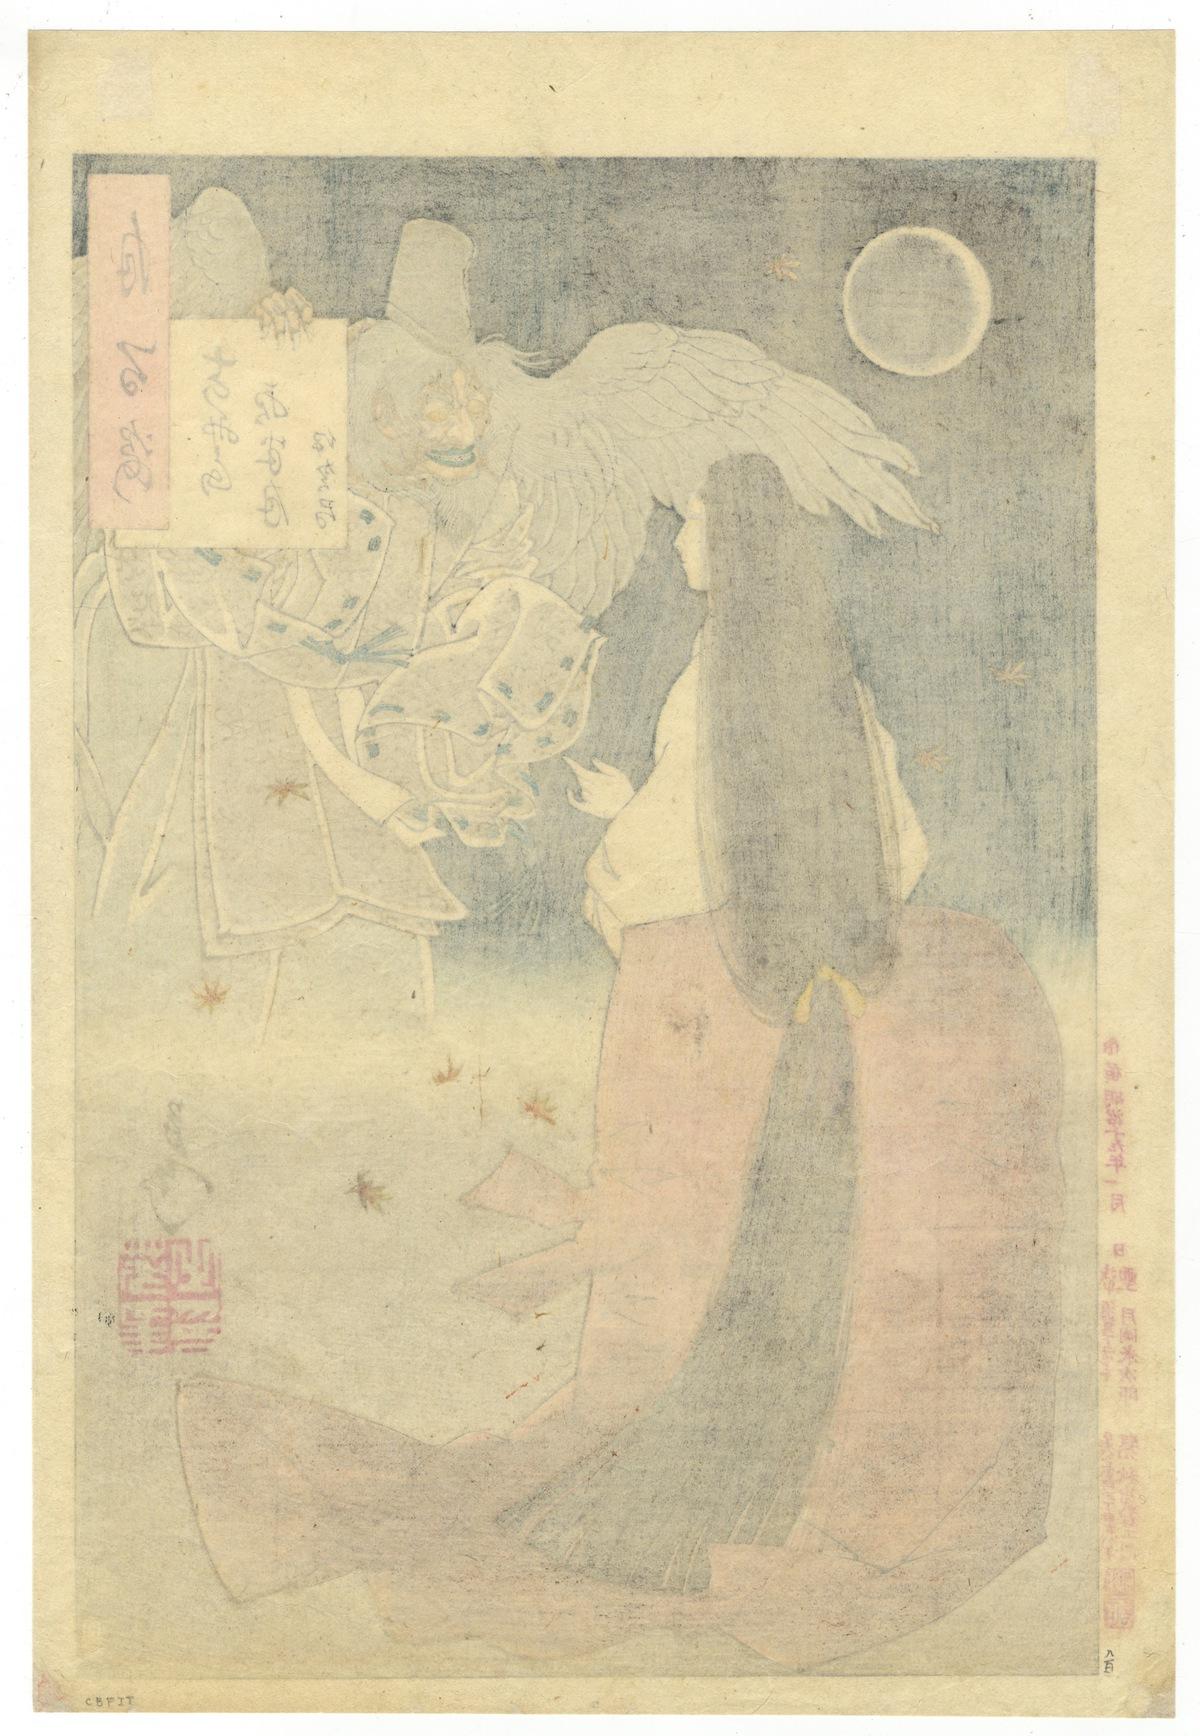 Artist: Yoshitoshi Tsukioka (1839–1892)
Title: Mount Yoshino midnight-moon, Iga no Tsubone
Series: Tsuki Hyakushi (One Hundred Aspects of the Moon)
Publisher: Akiyama Buemon
Date: 1886
Dimensions: 36.6 x 25.0 cm
Condition: Some hinges remain